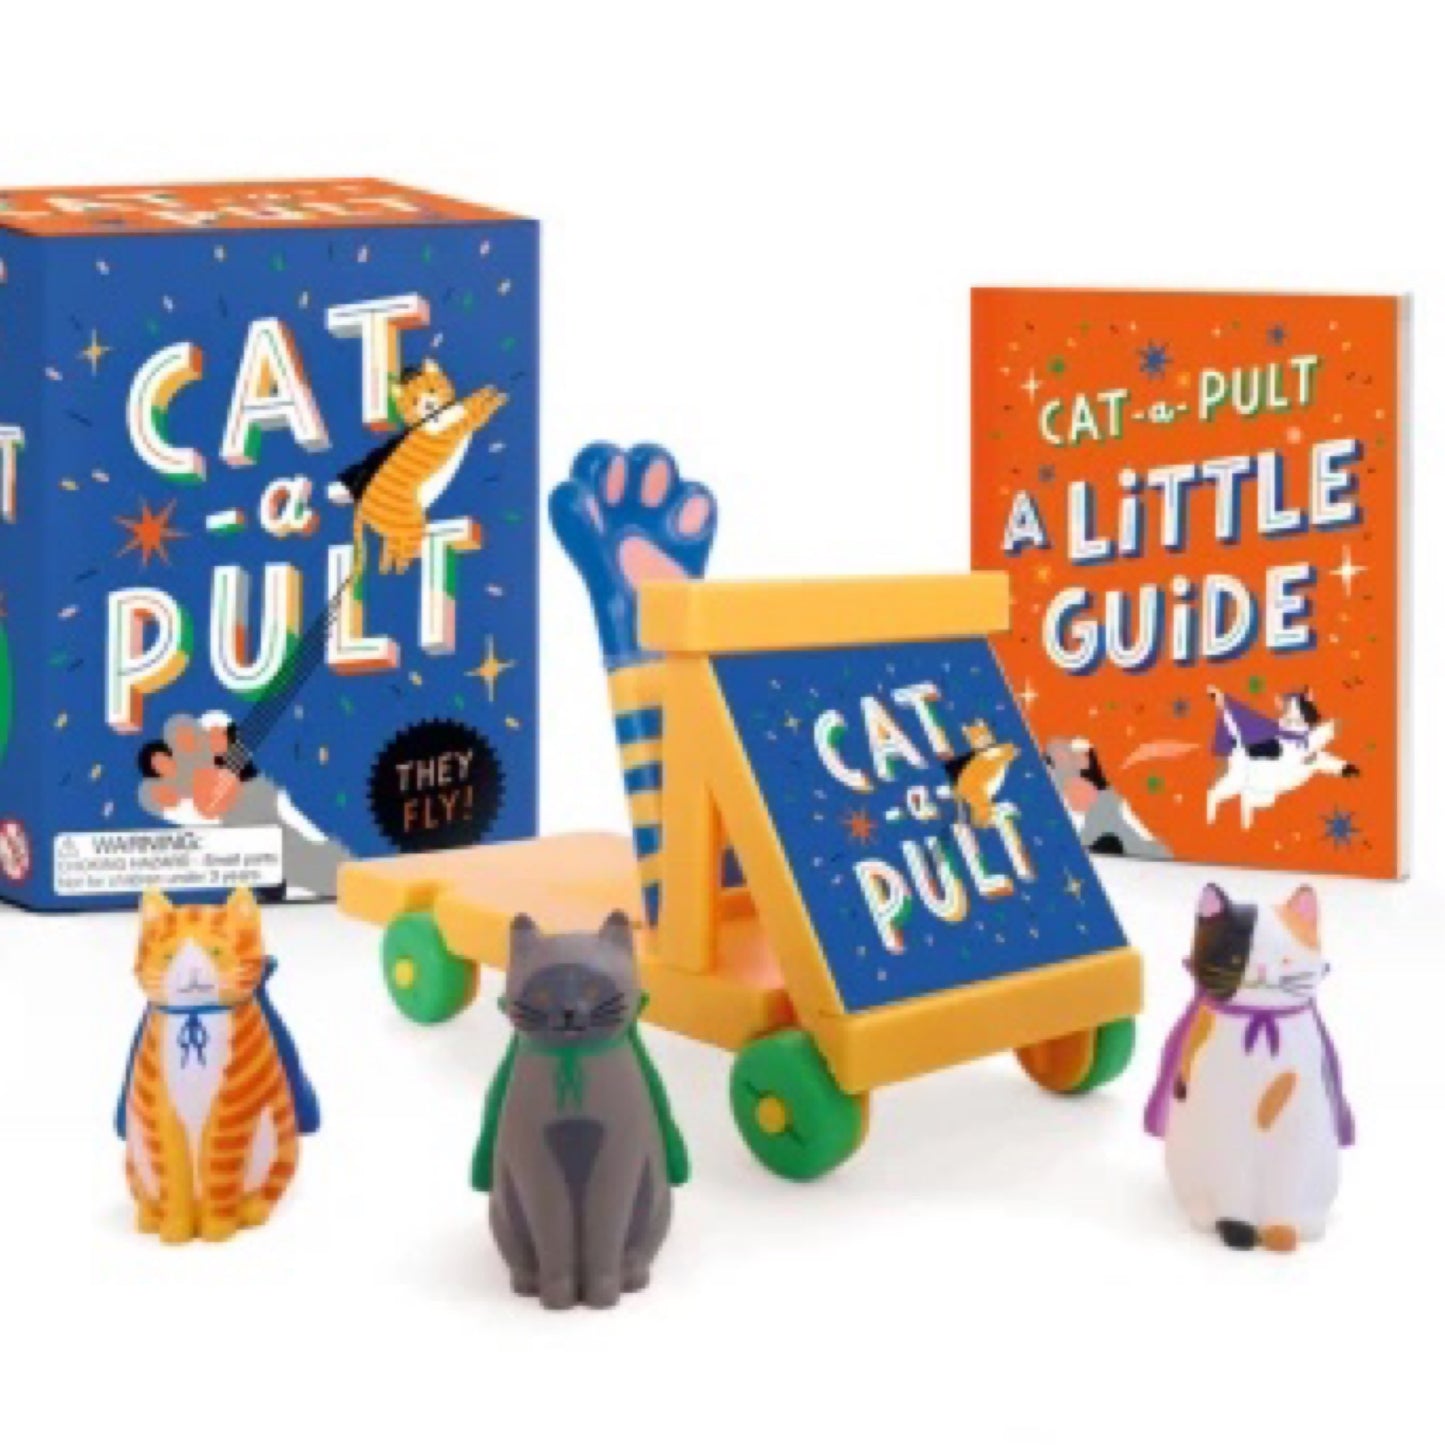 Cat-a-Pult Mini Kit